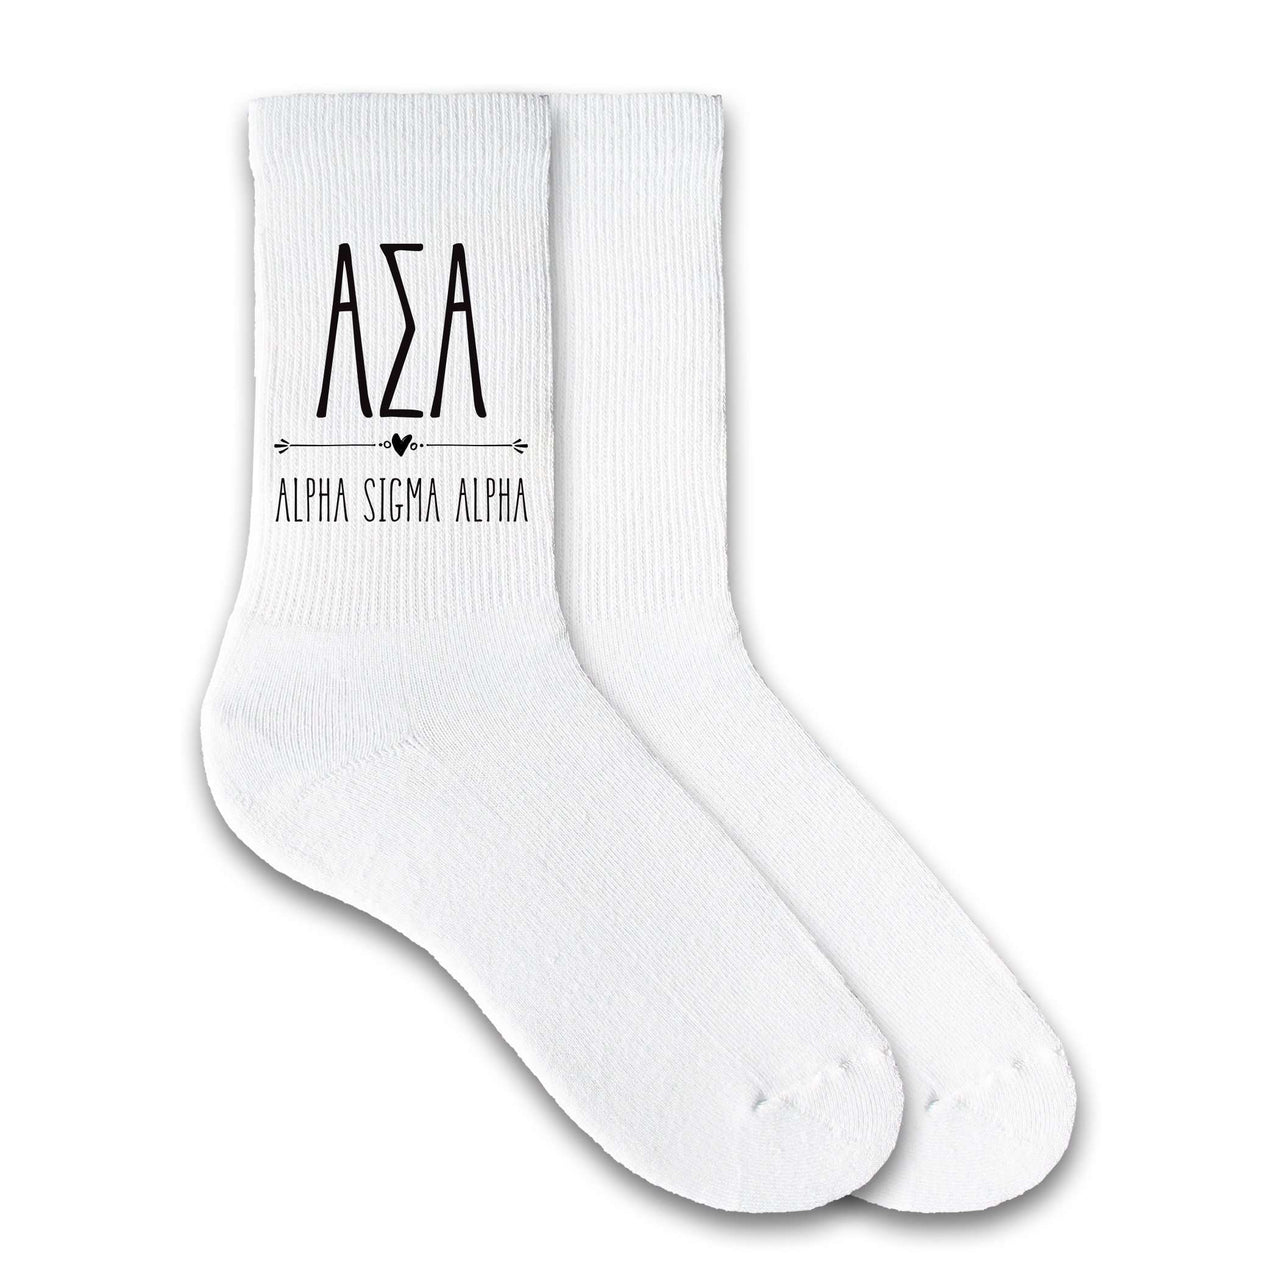 Alpha Sigma Alpha sorority letters and name custom printed on cotton crew socks